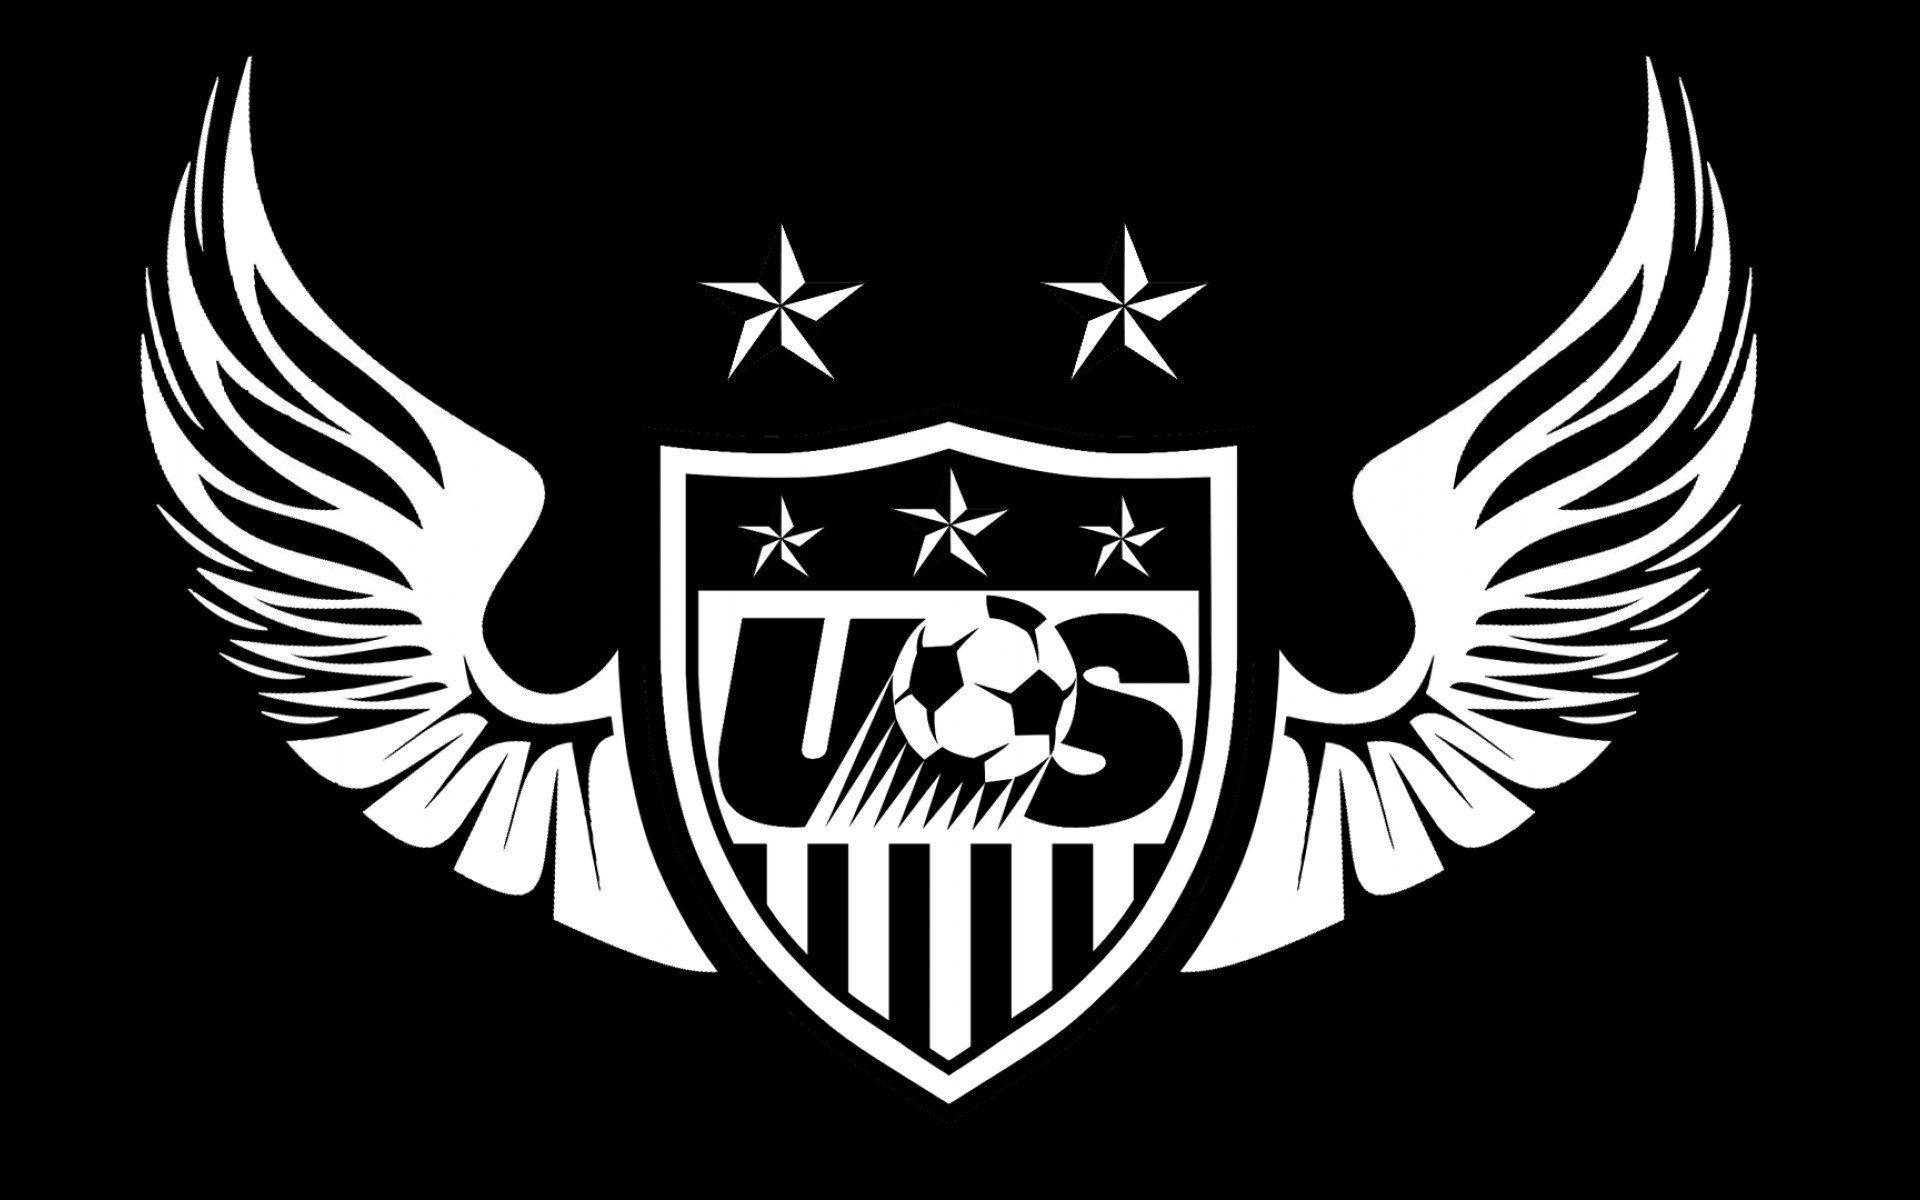 USA Soccer Logo HD Wallpaper, Background Image